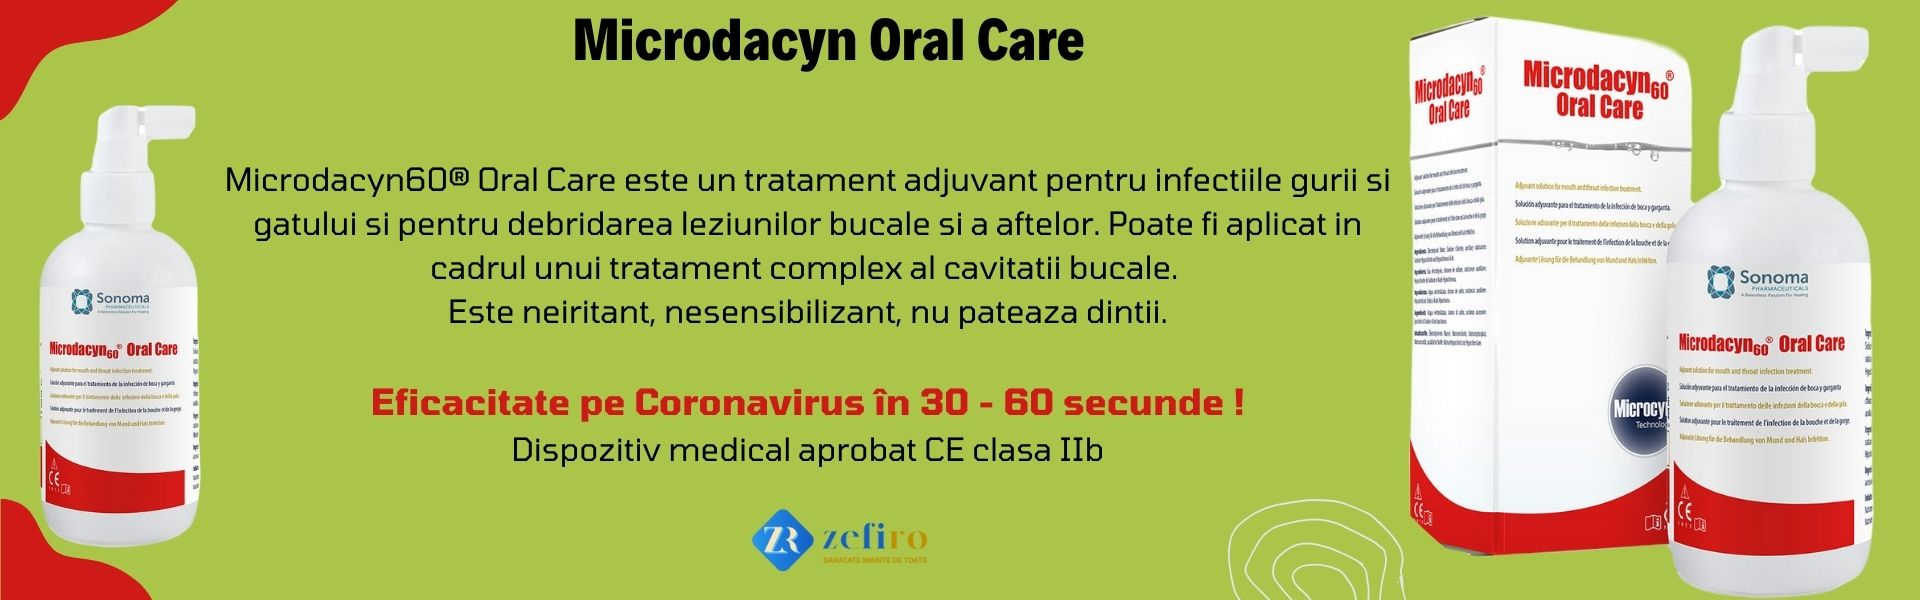 Microdacyn oral care